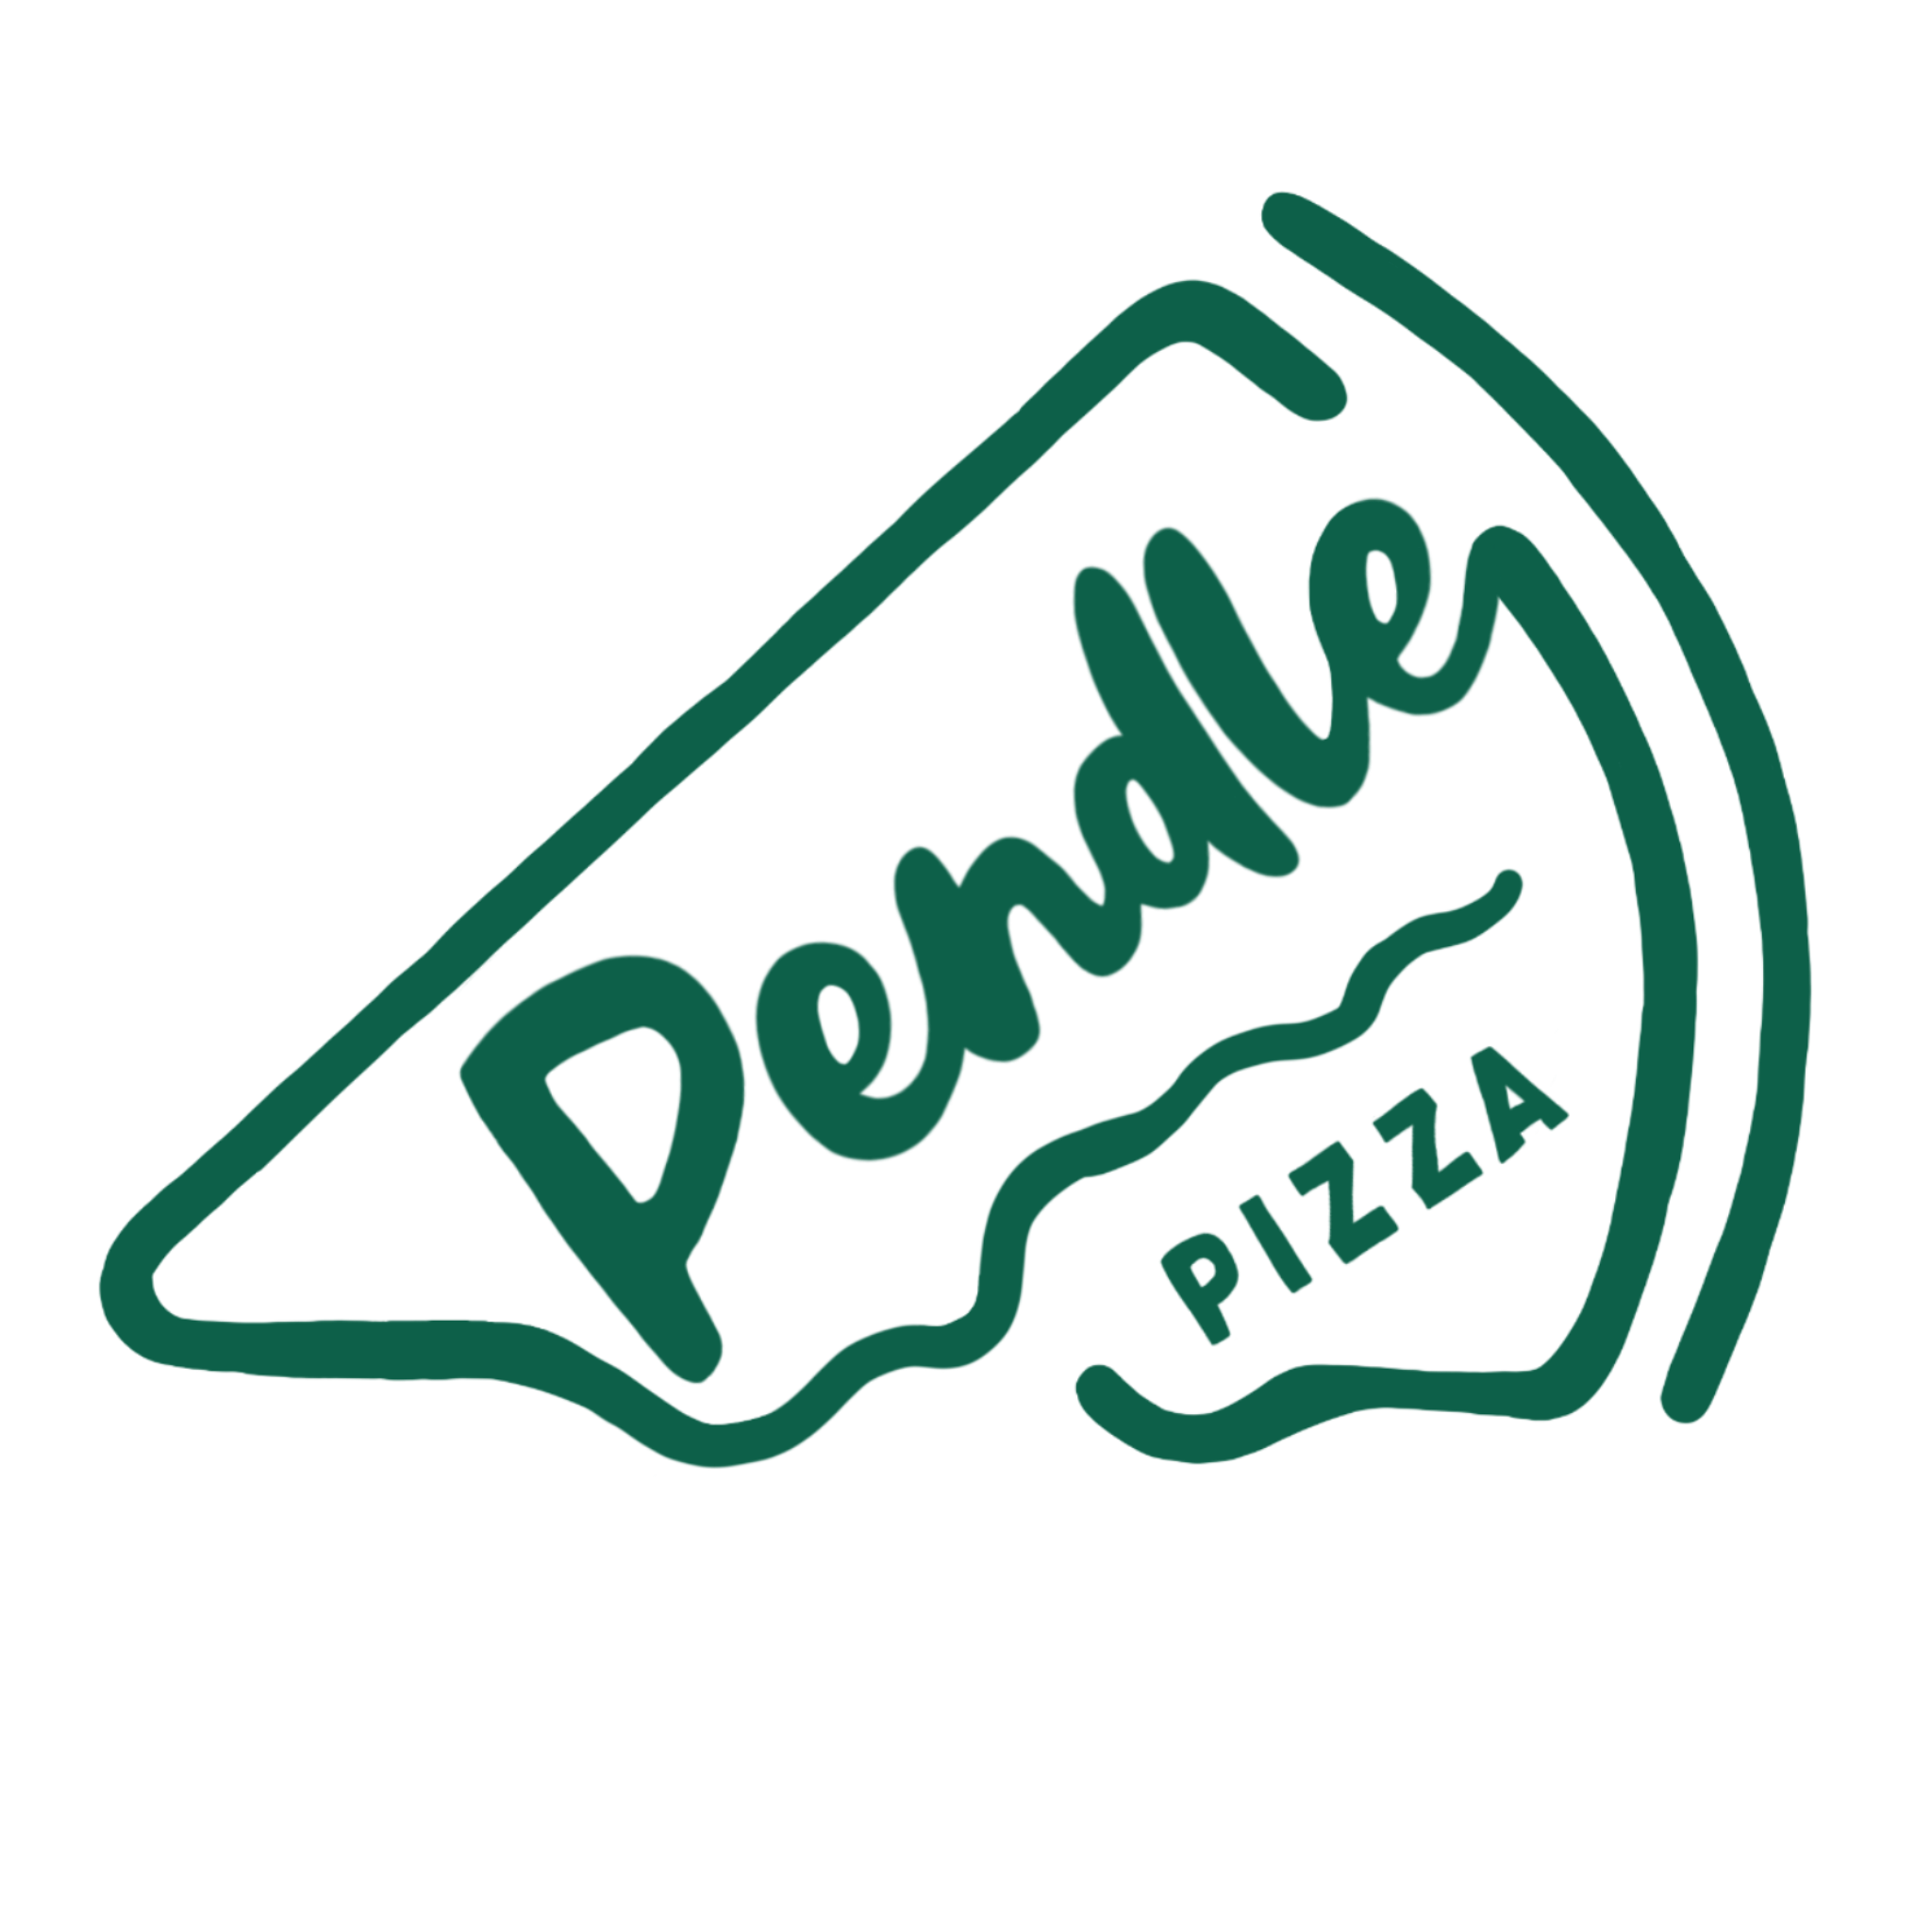 Pendle Pizza